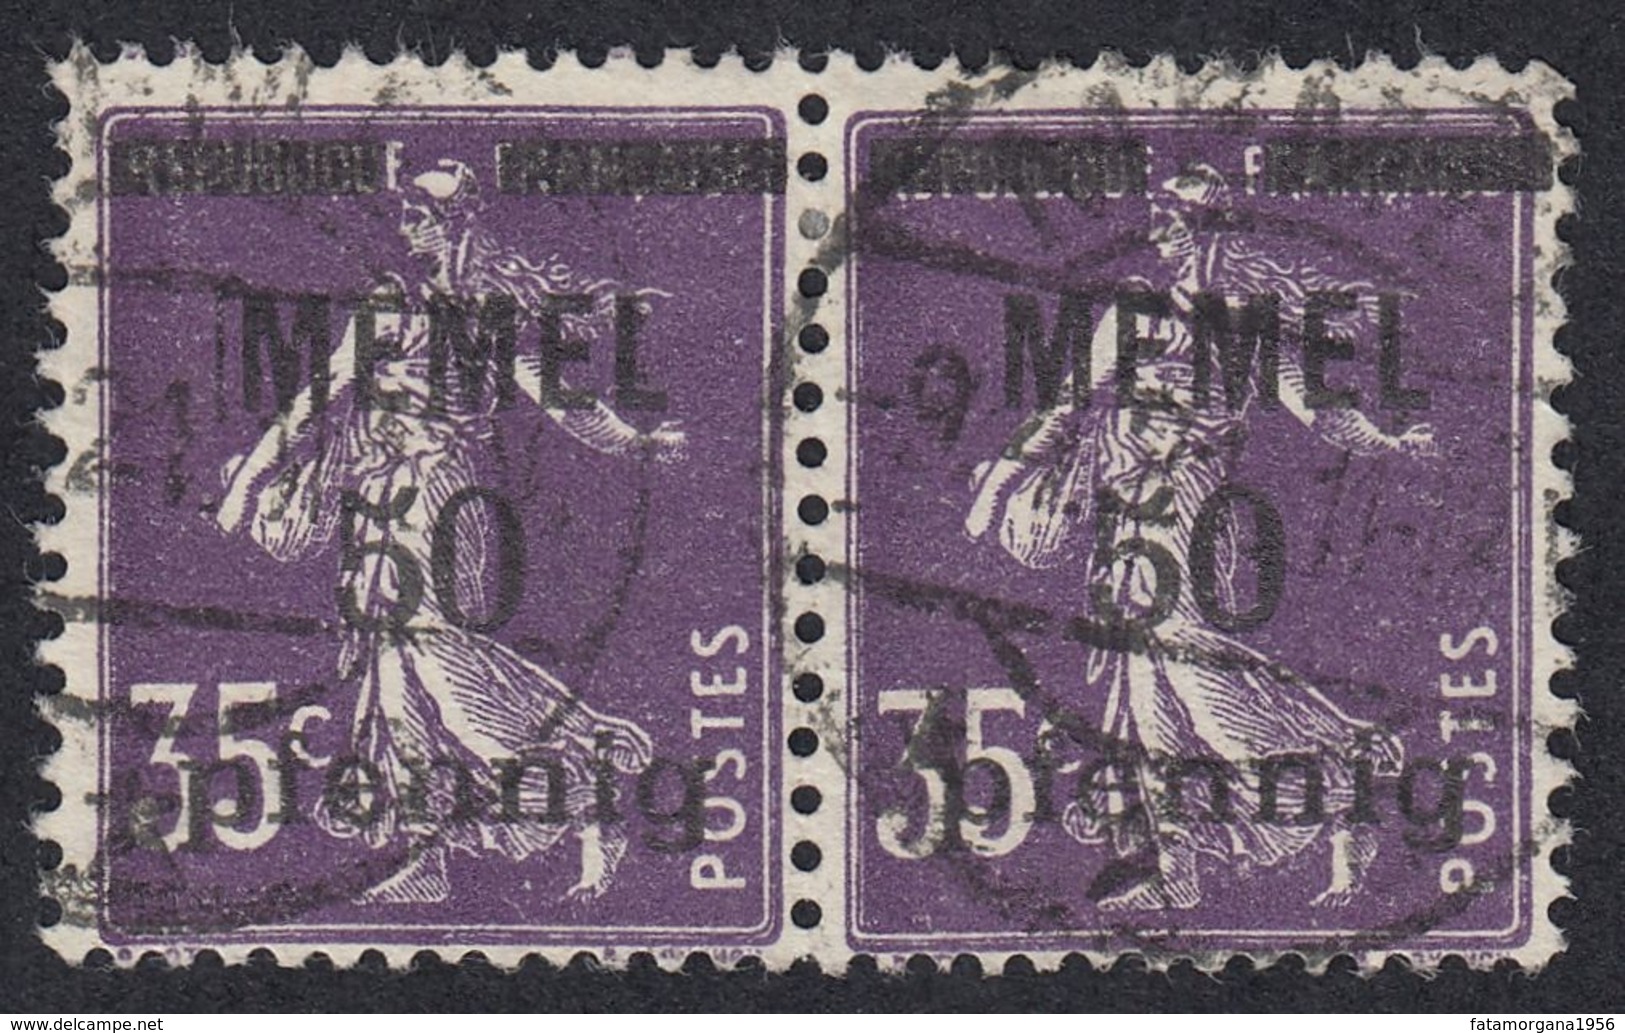 FRANCE Francia Frankreich (colonie) - 1920/1921 - Memel - Yvert 23, Due Francobolli Uniti, Obliterati - Used Stamps